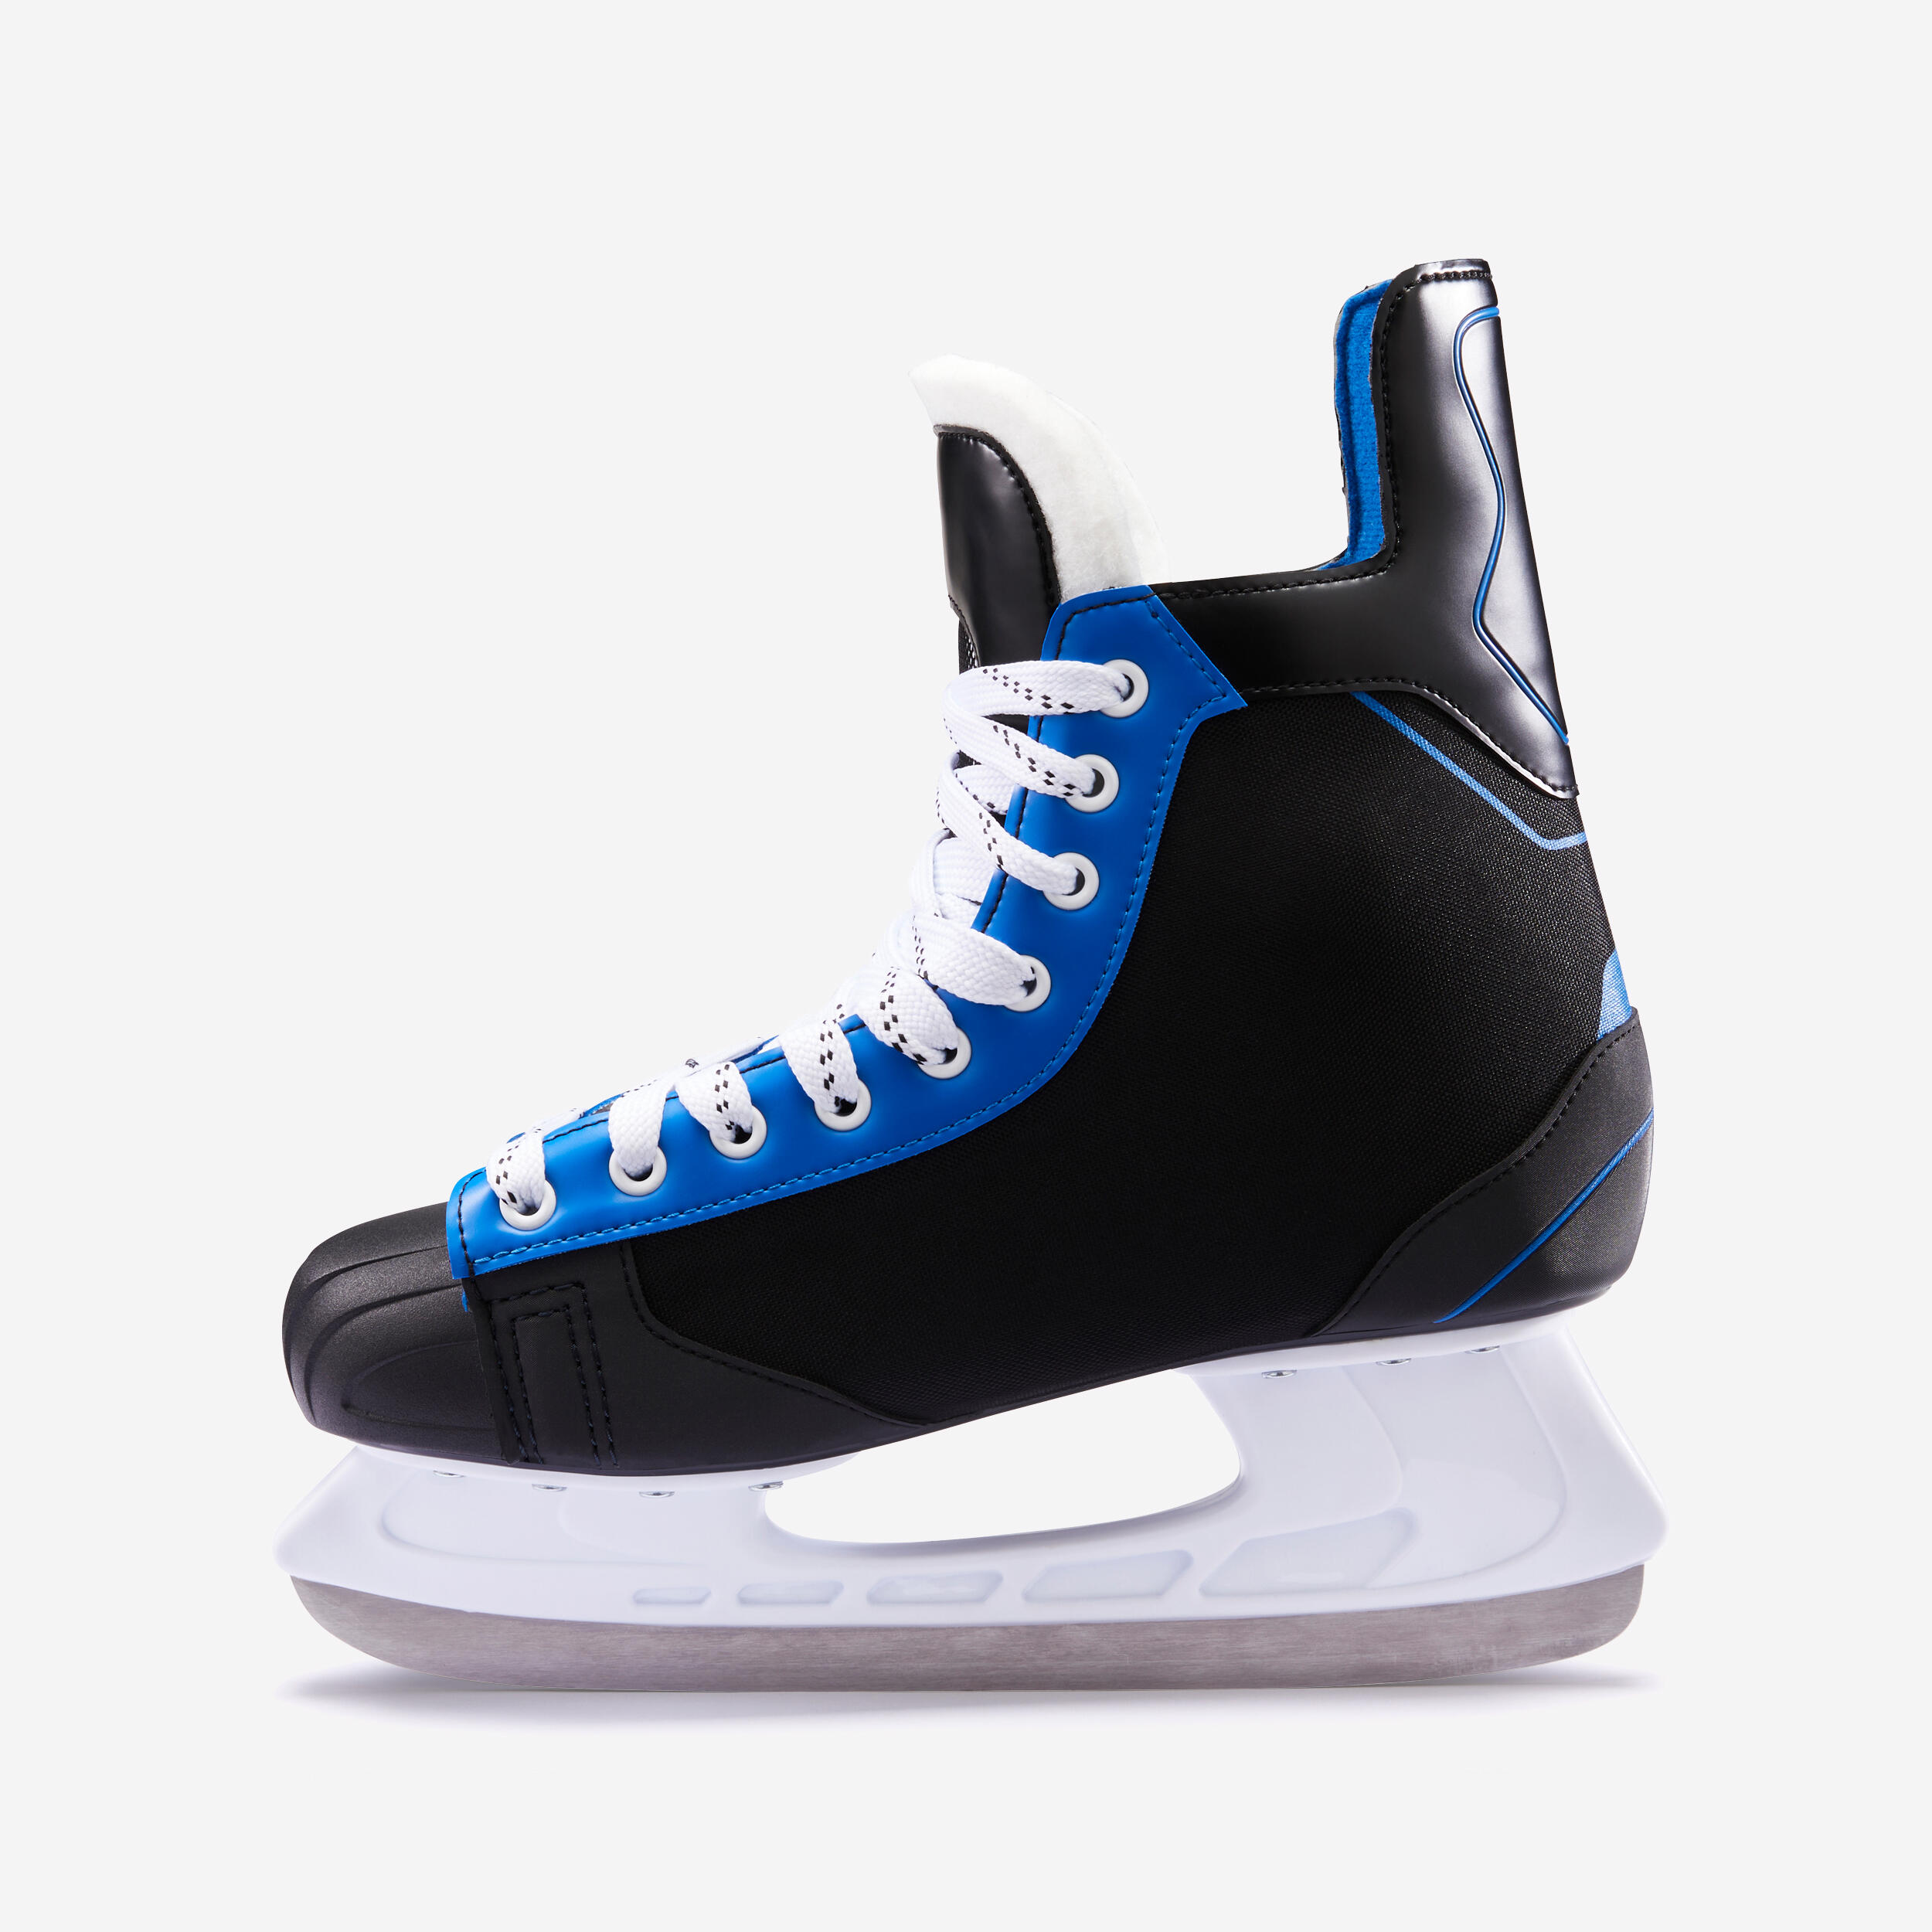 Patins de hockey - IH 100 SR bleu - OROKS